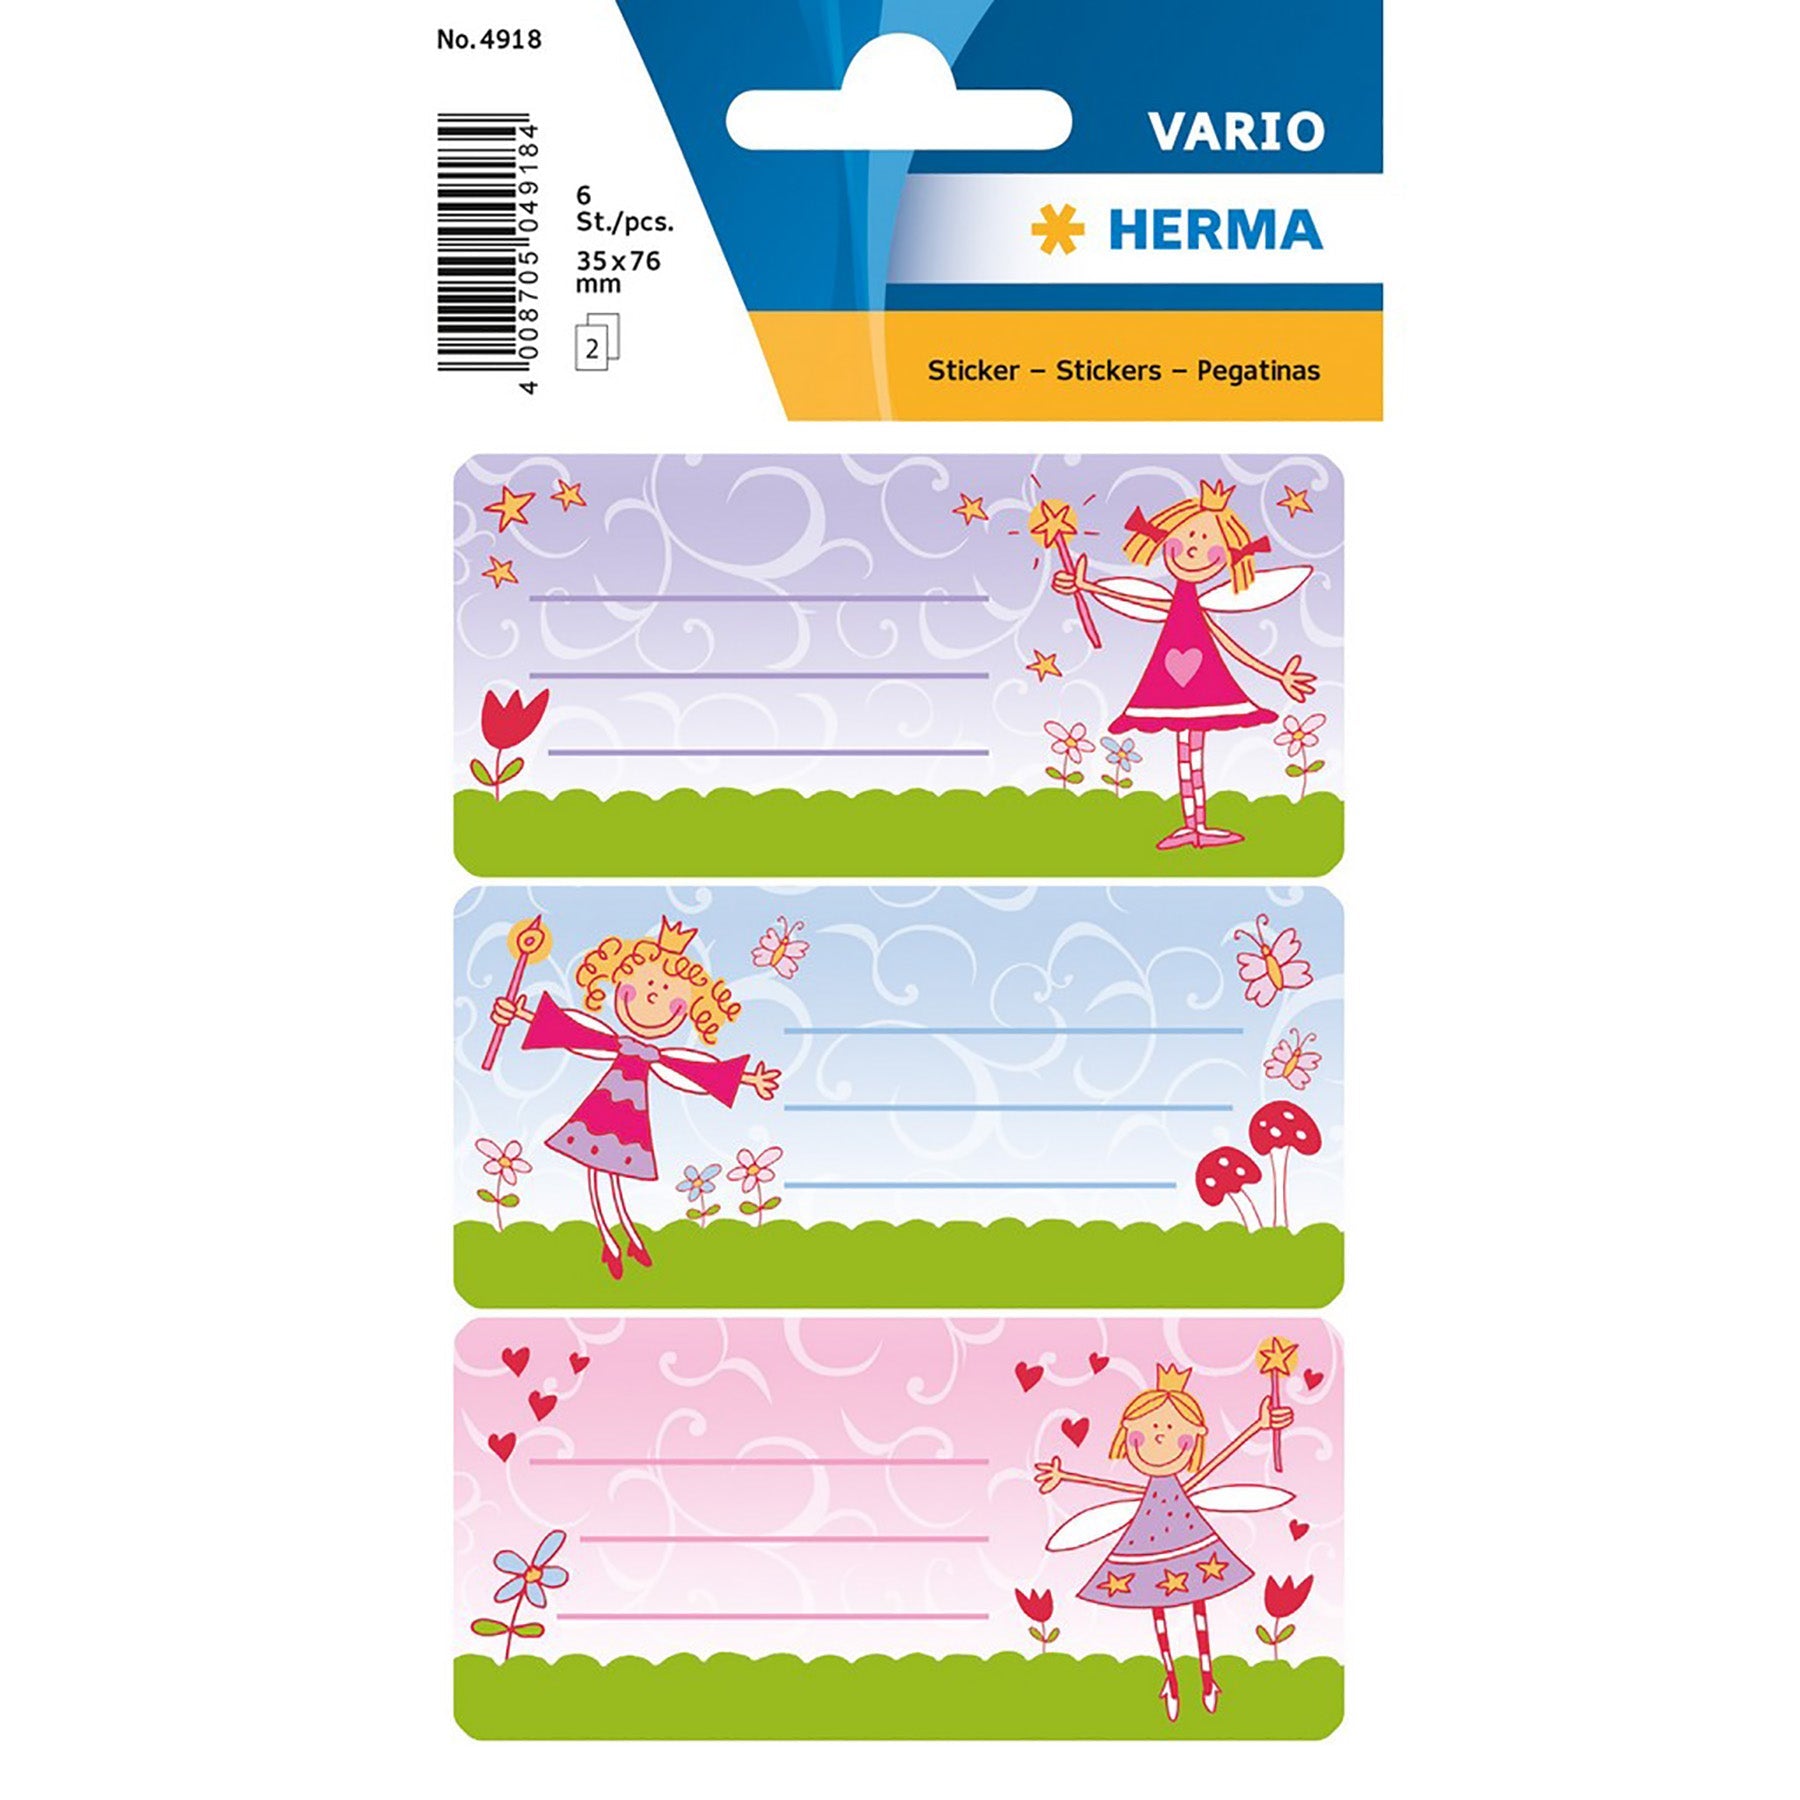 Herma Vario 2 Sheets School Labels Princess 3x1.37in each